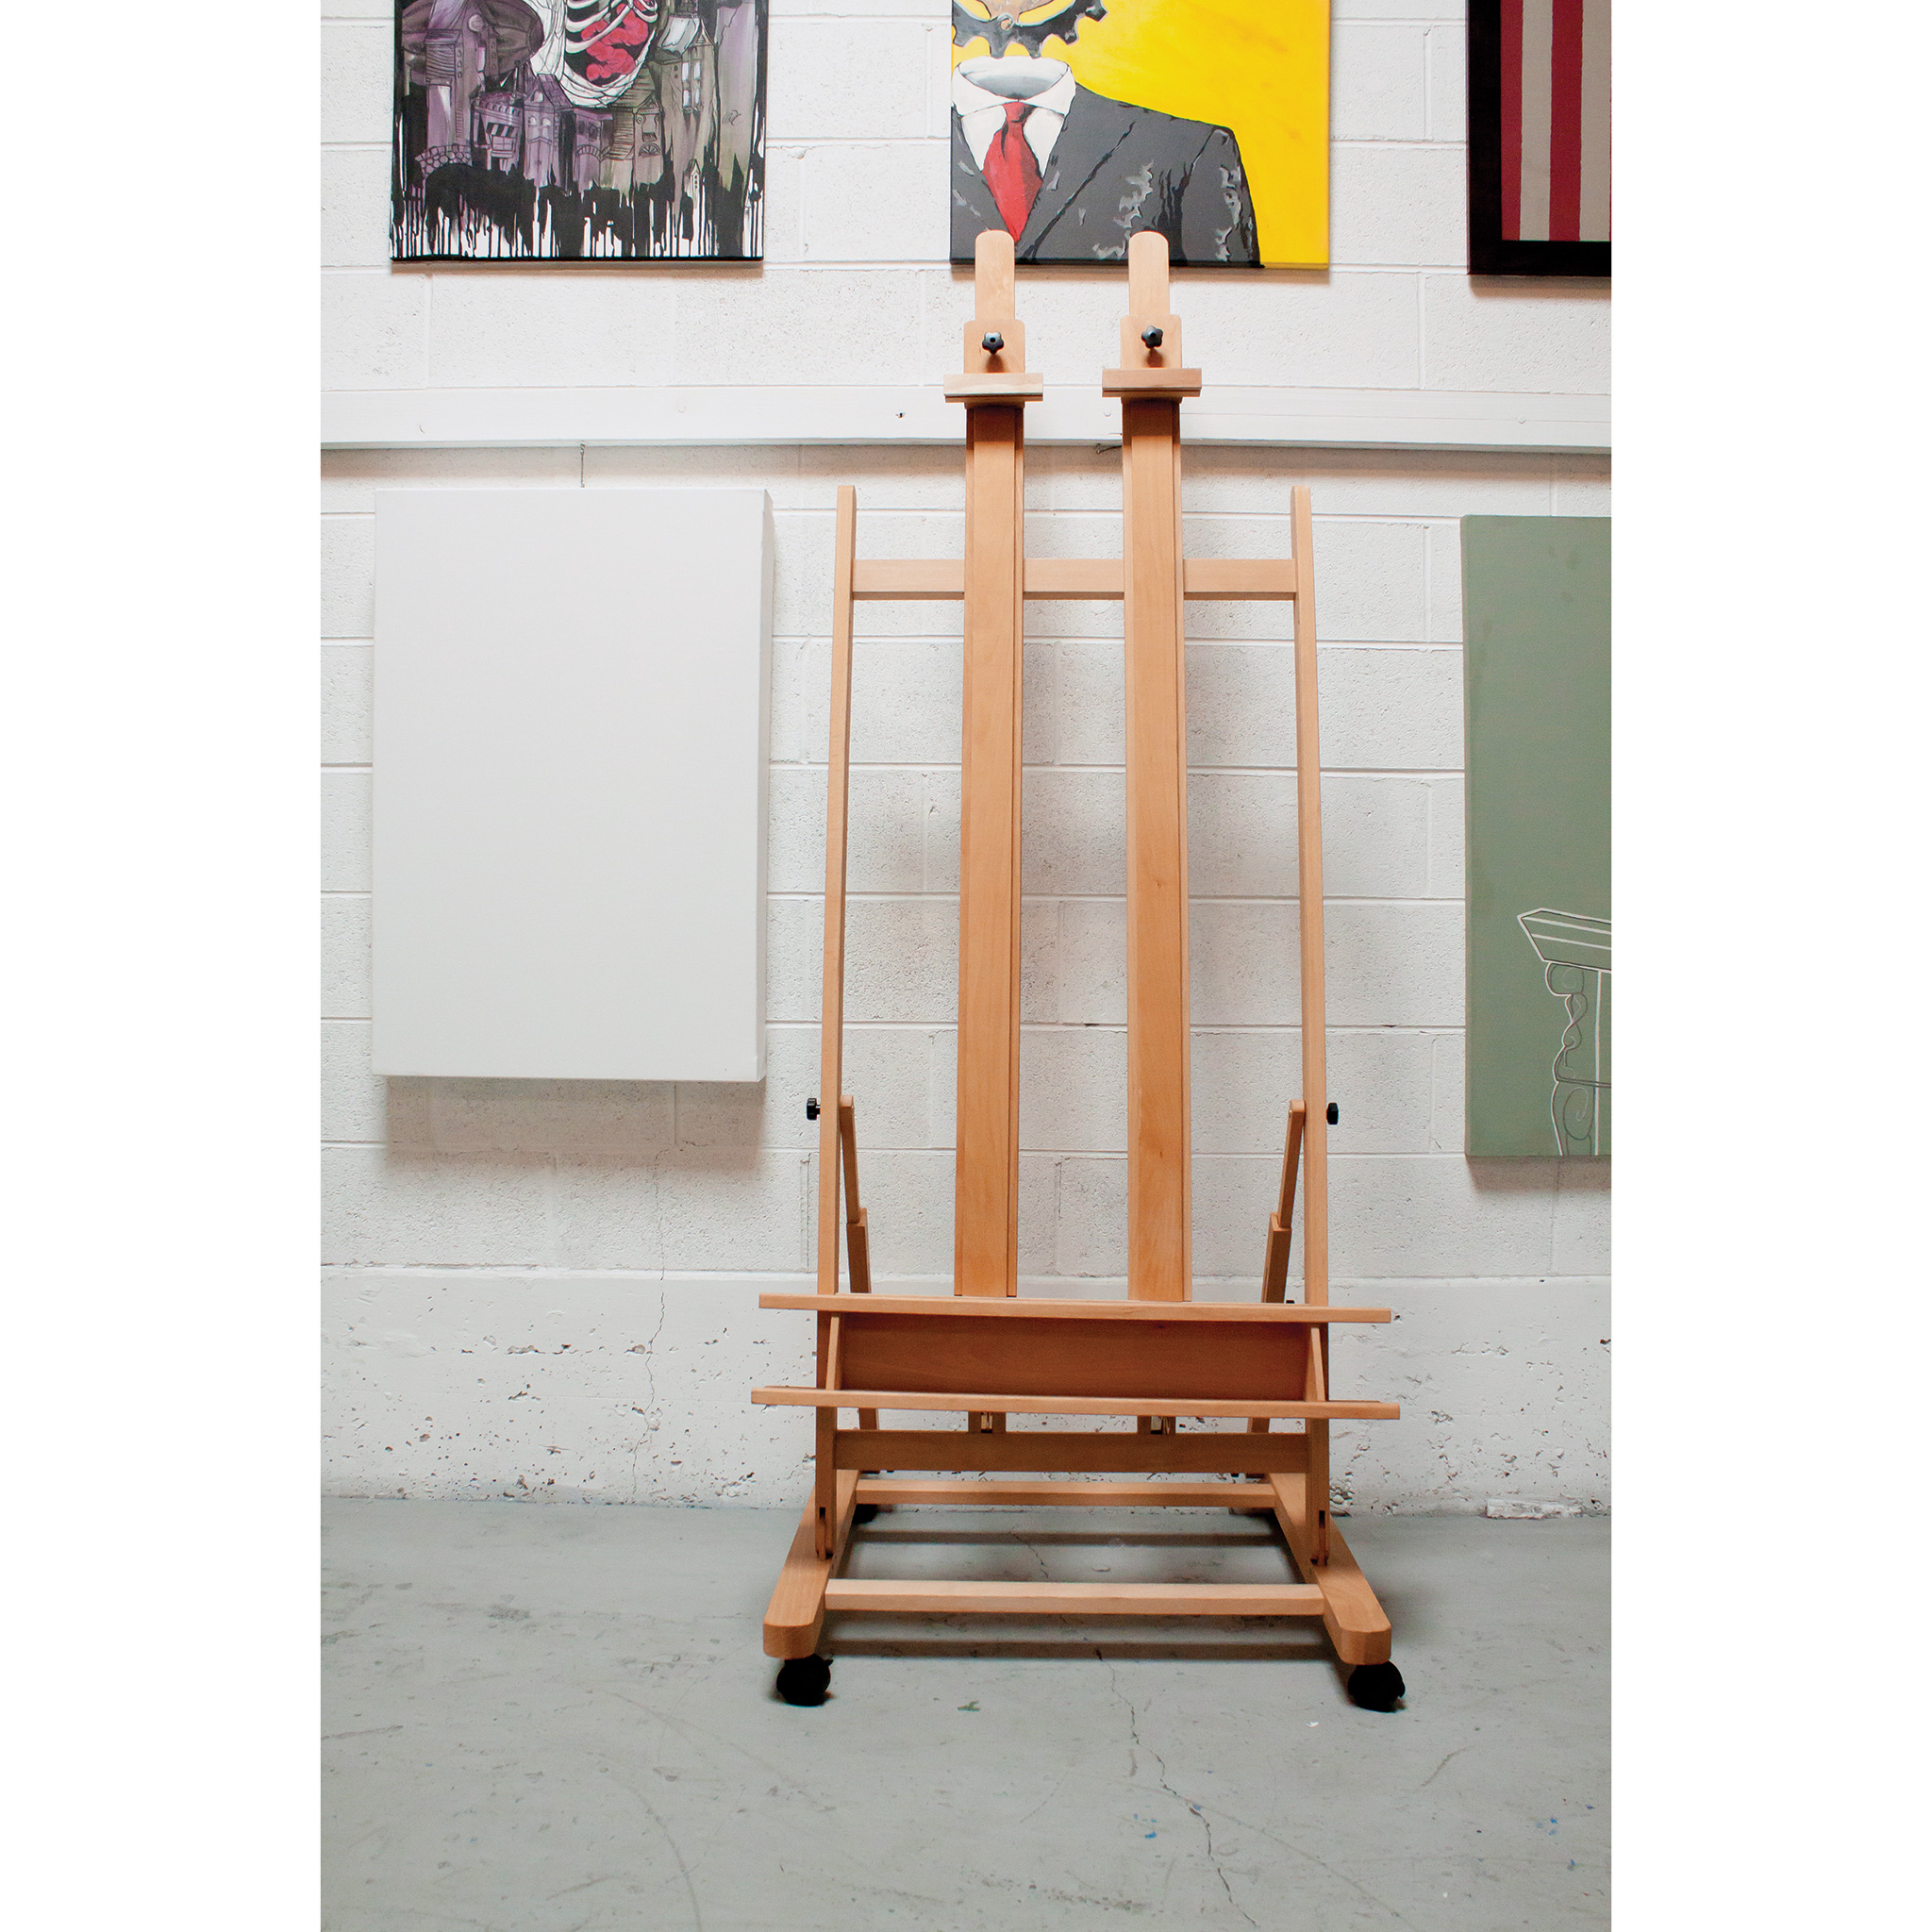 Large Heavy-Duty Studio Artist Easel H-Frame Wood Painting Art Easel  Standing